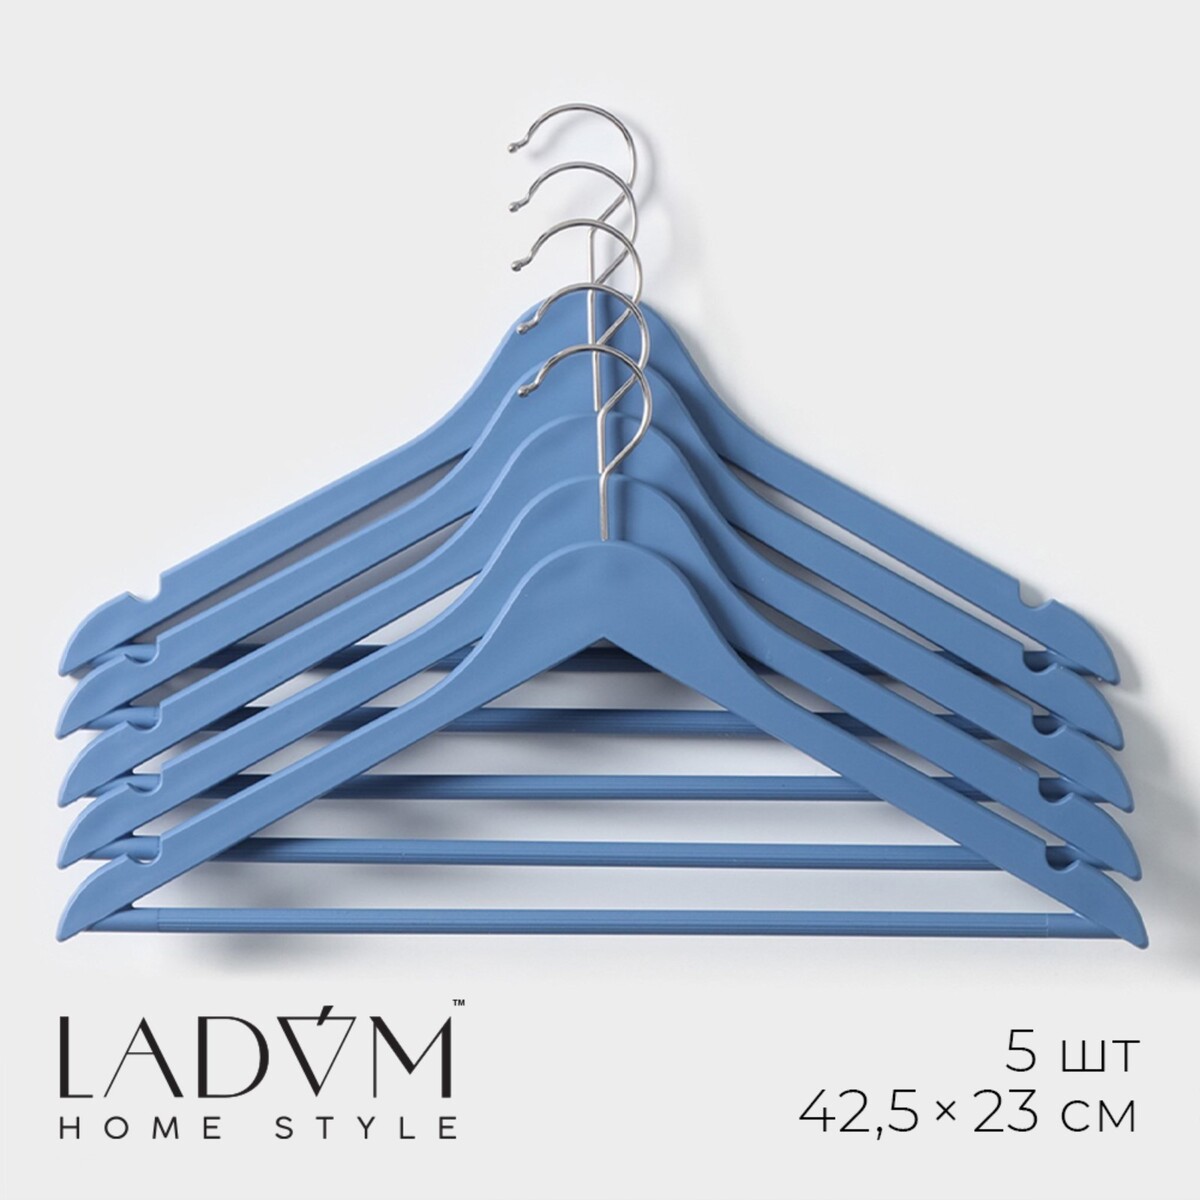 Плечики - вешалки для одежды с перекладиной ladо́m, 42,5×23 см, набор 5 шт, пластик, цвет синий LaDо́m